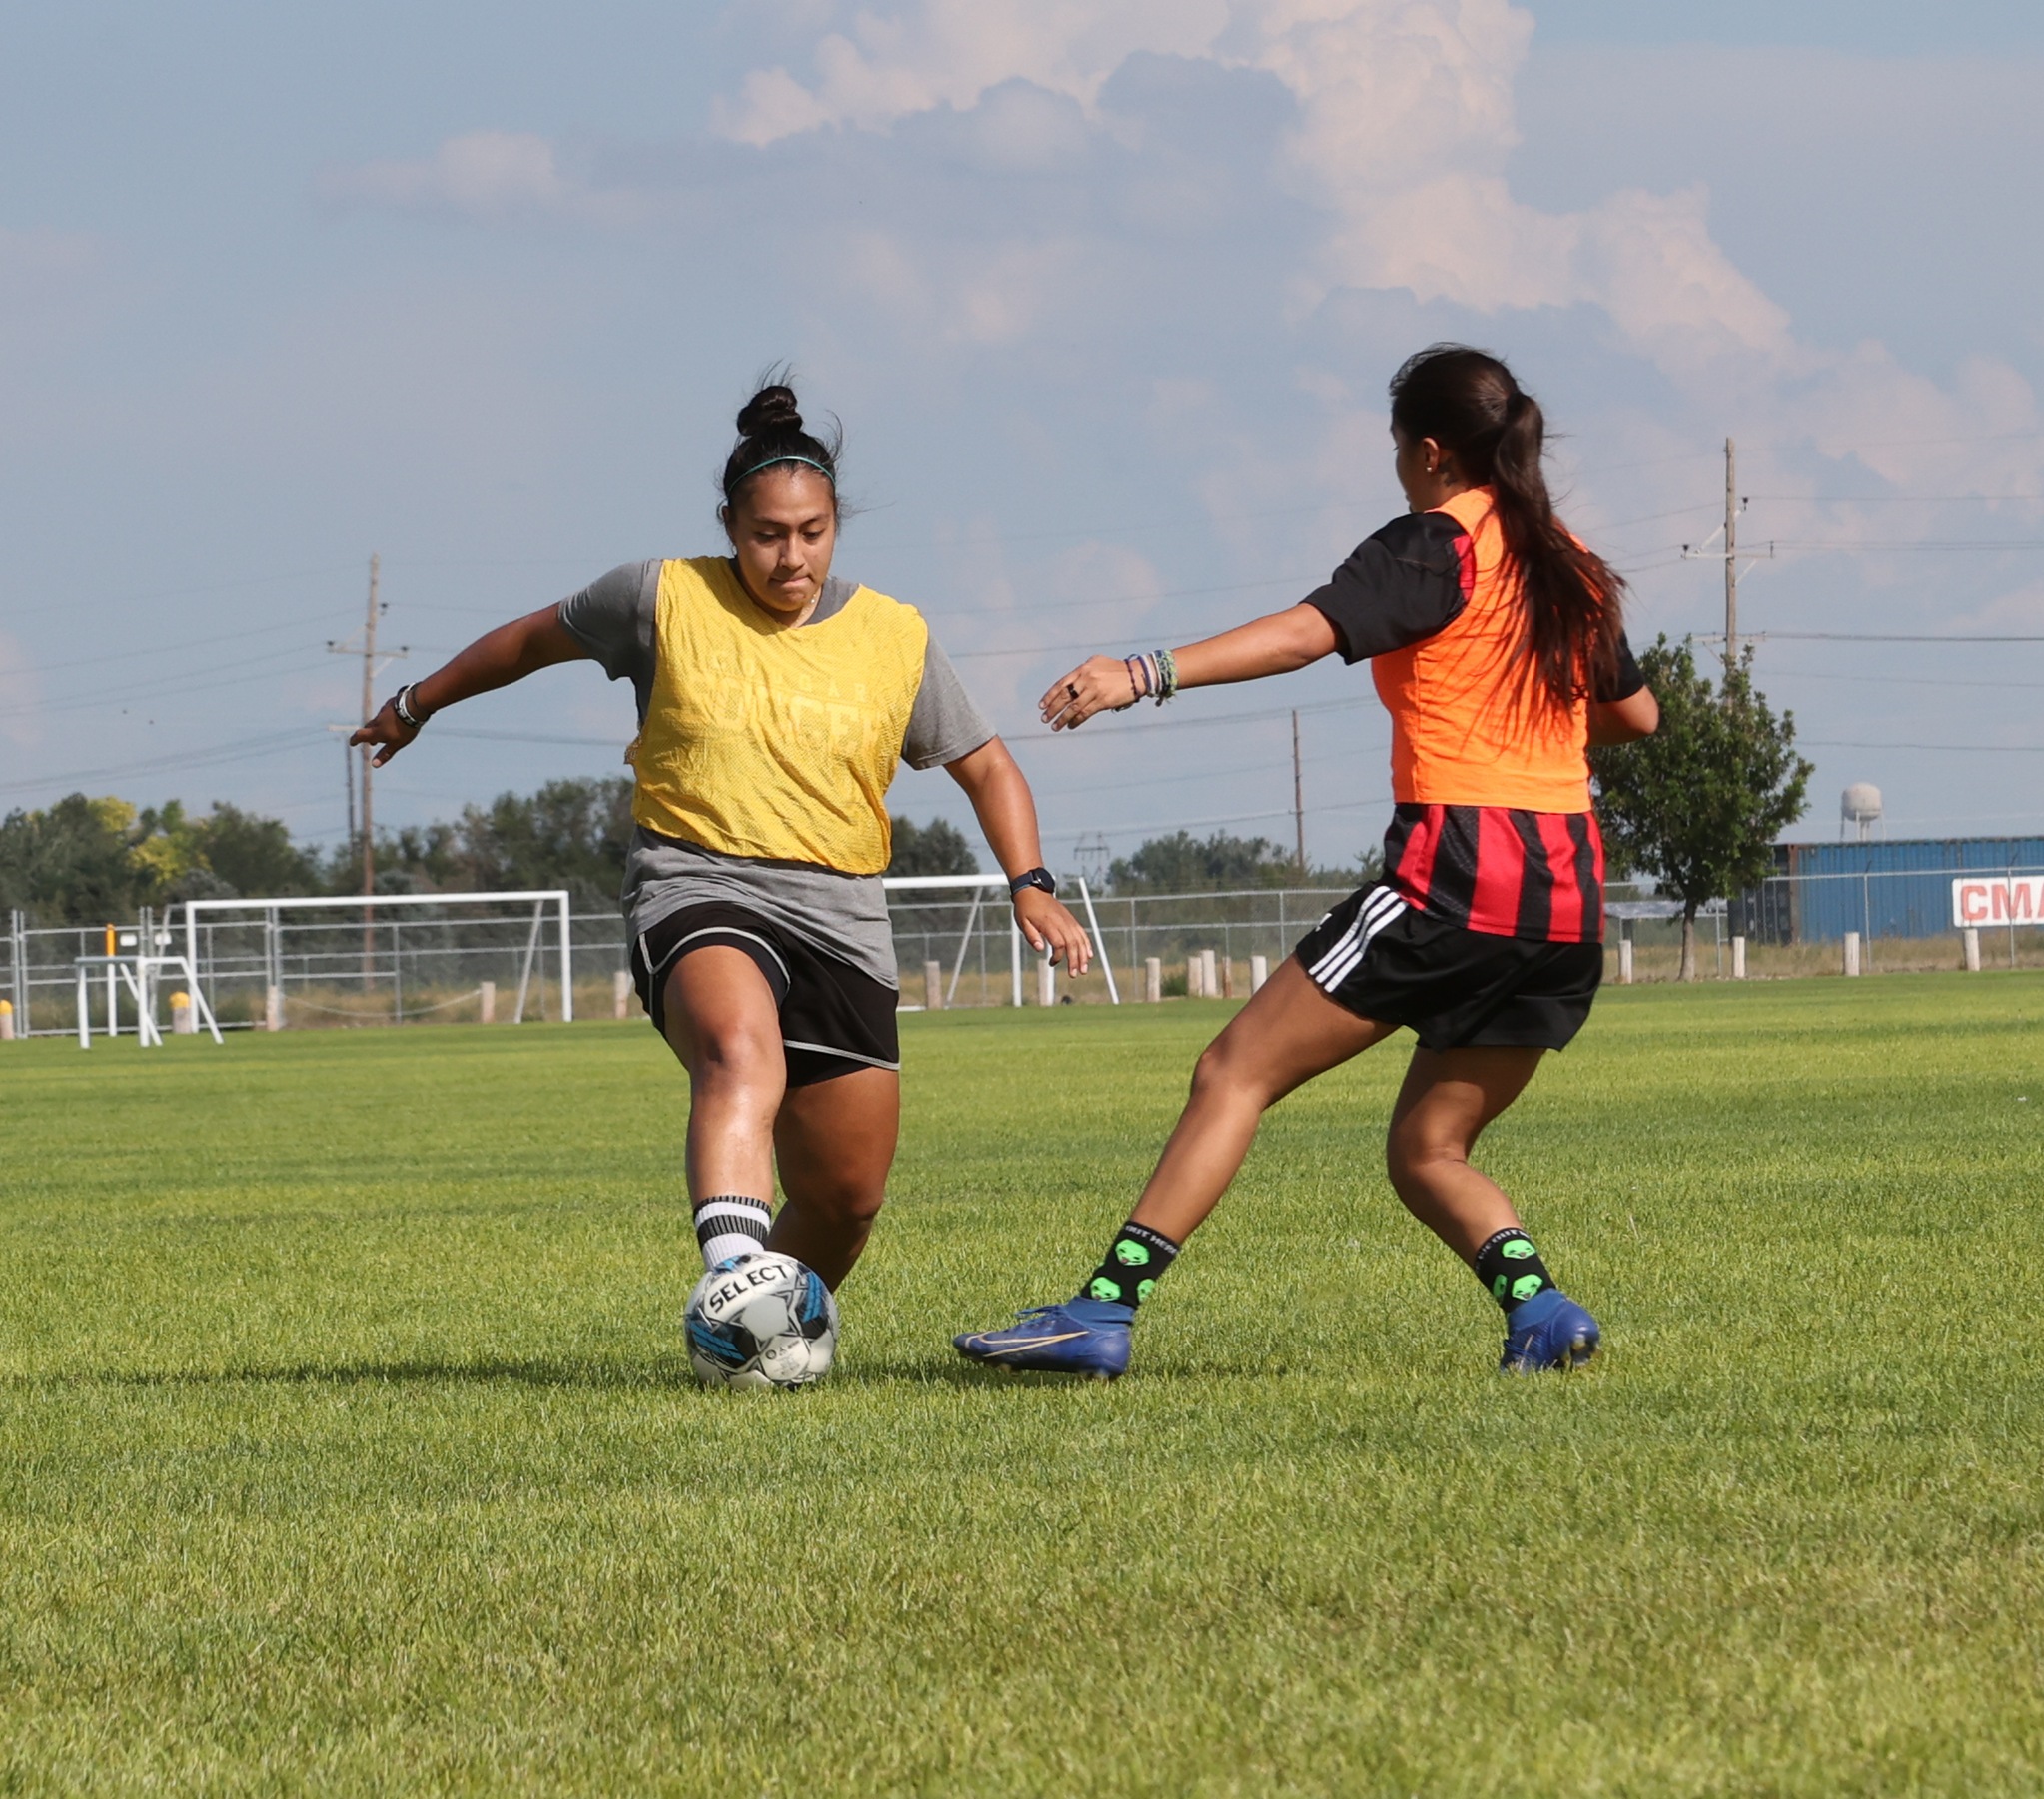 Women's soccer action in the pre-season.